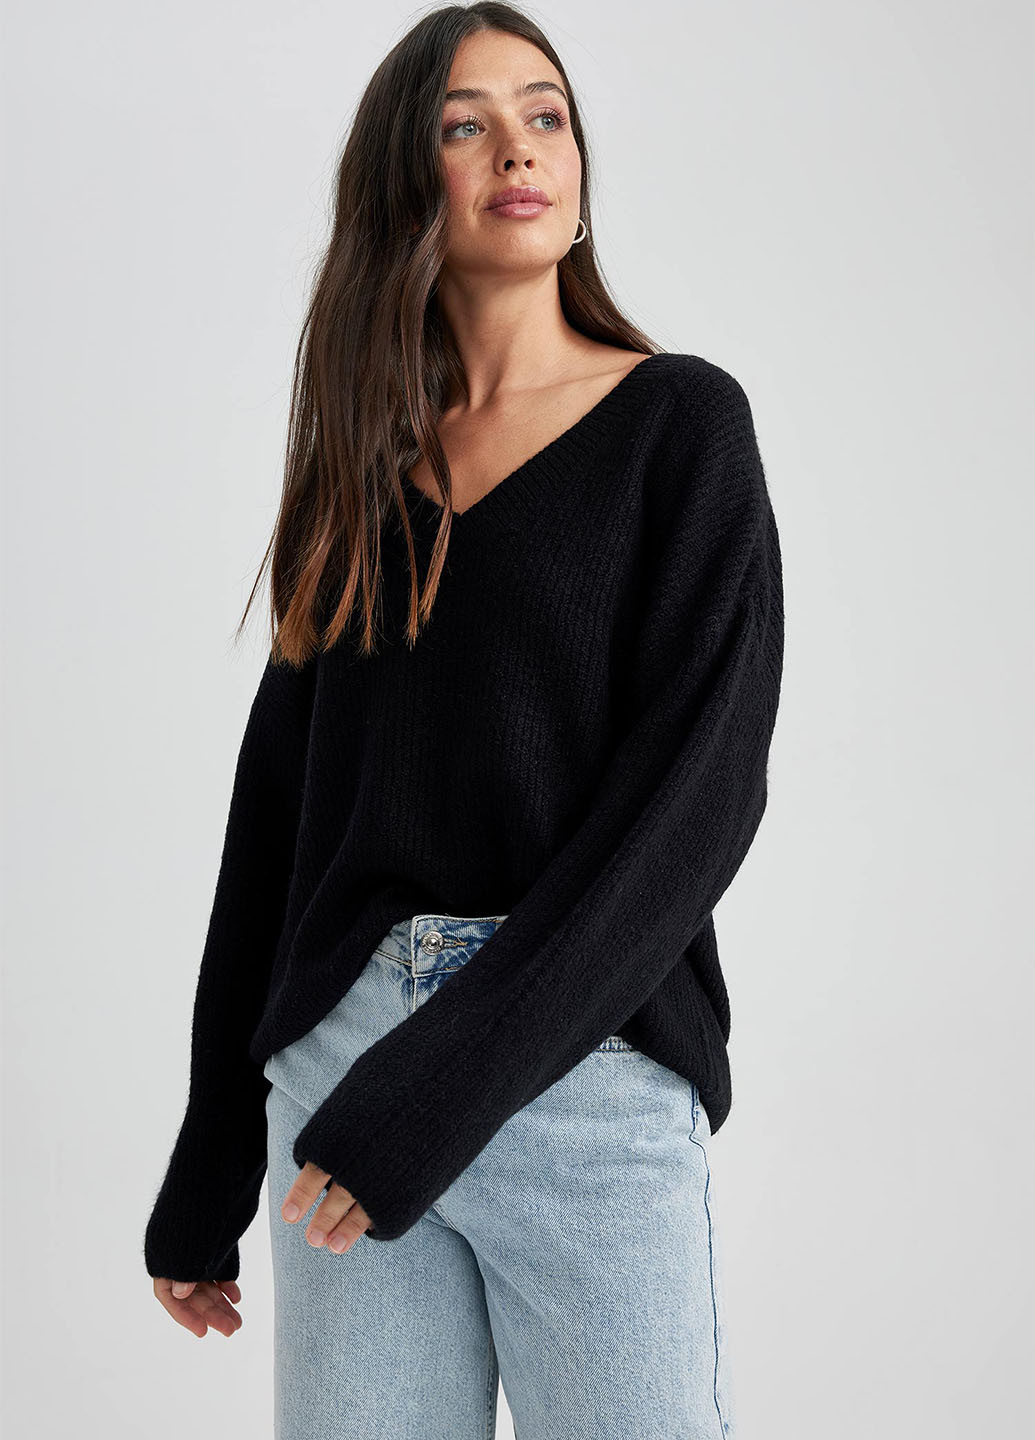 Чорний зимовий пуловер пуловер DeFacto